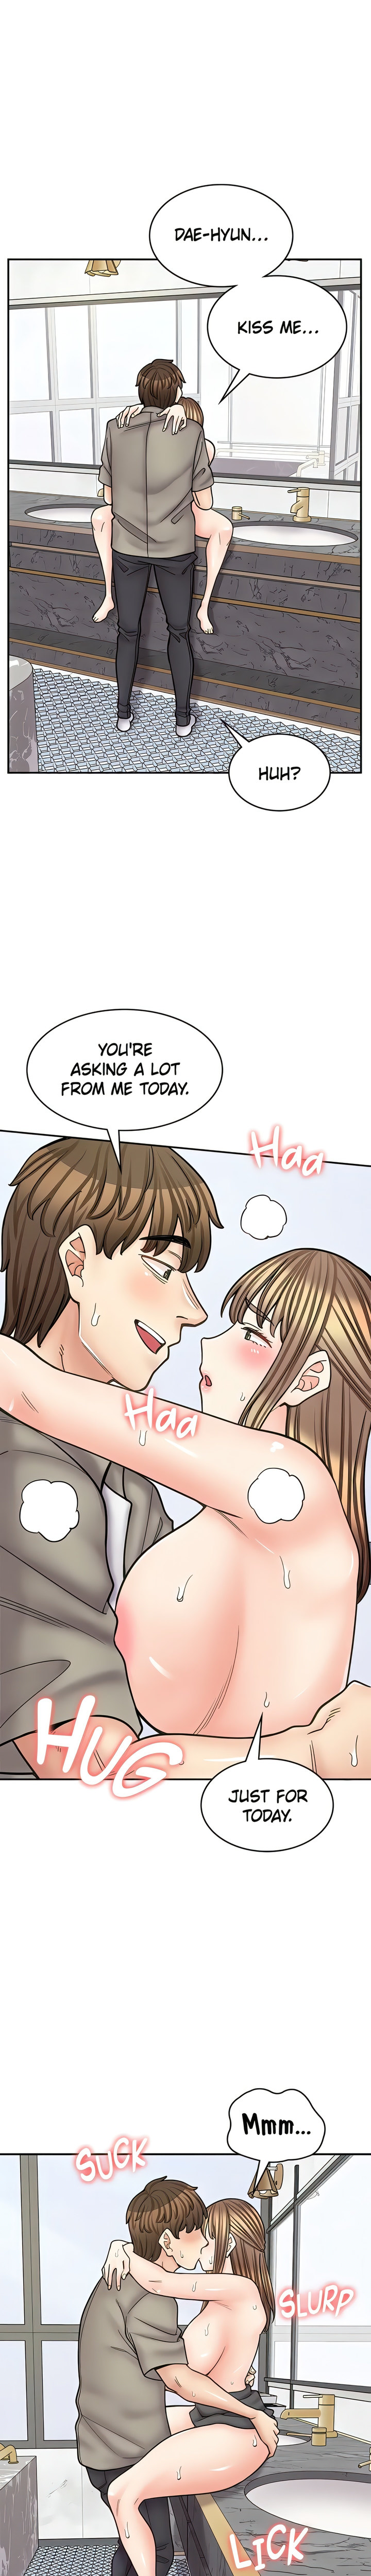 Erotic Manga Café Girls - Chapter 53 Page 12